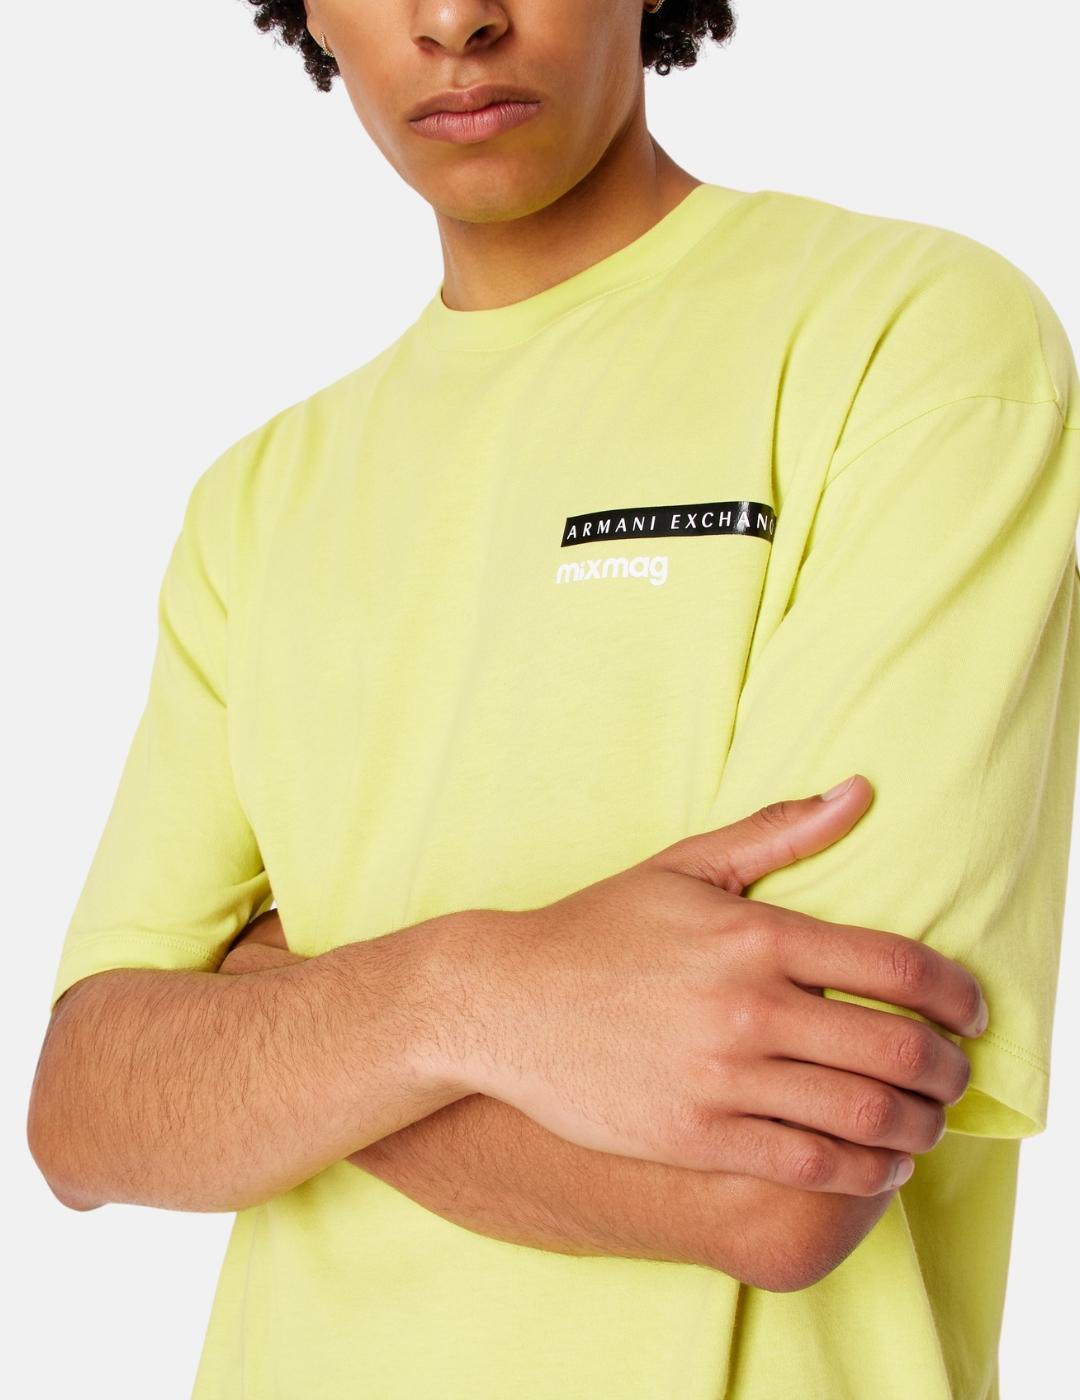 Camiseta Armani exchance amarilla mixmag hombre